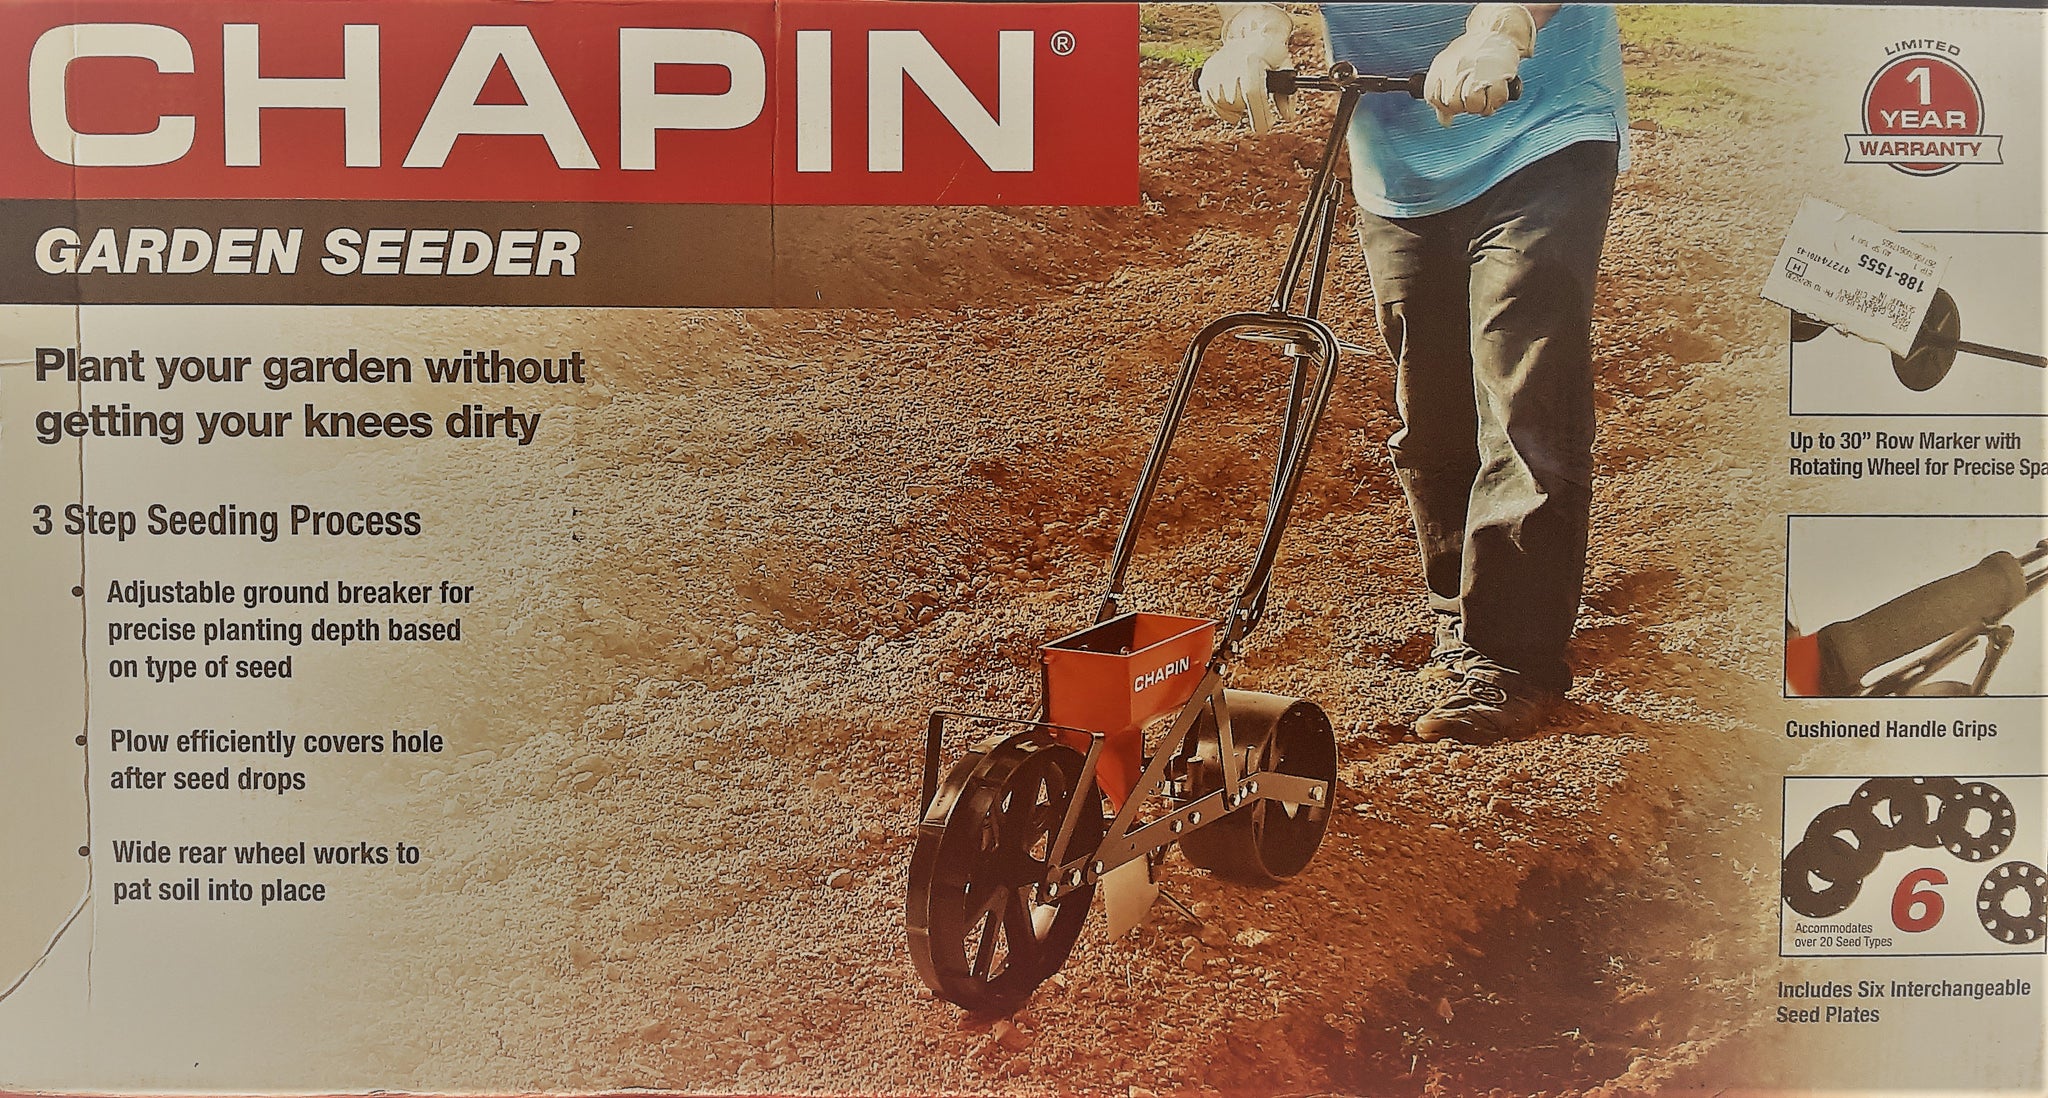 Chapin Garden Seeder